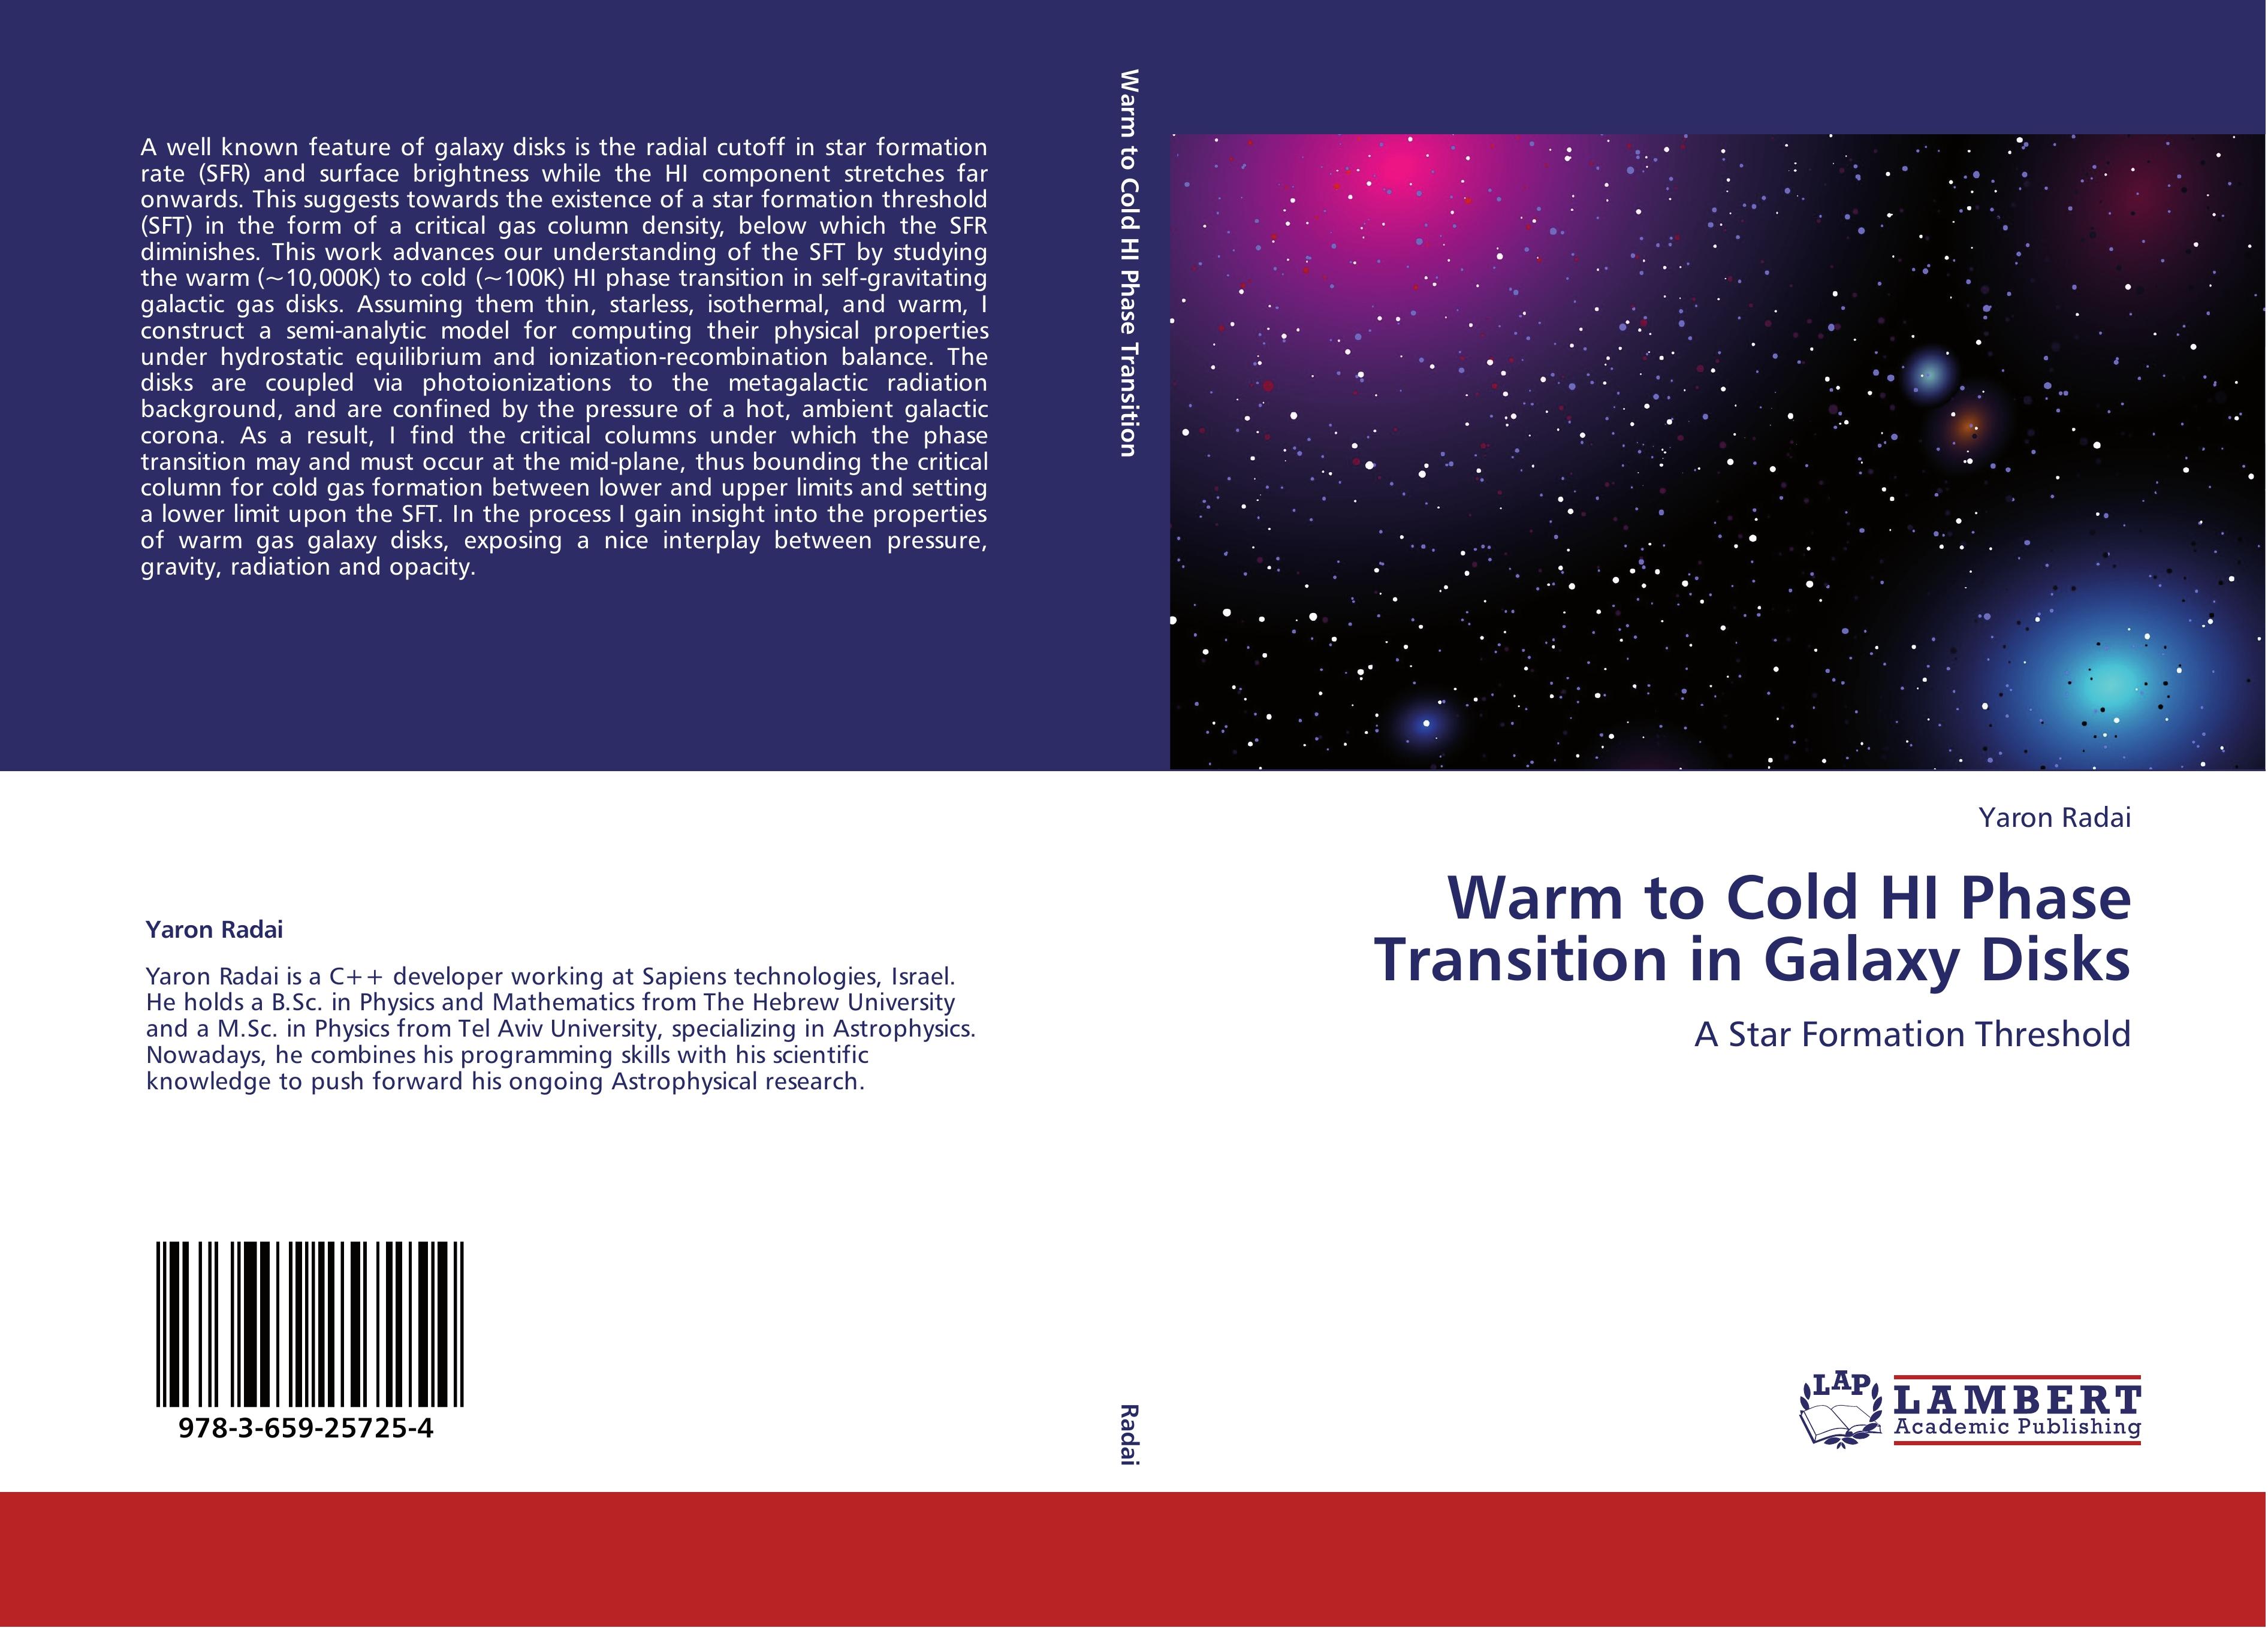 Warm to Cold HI Phase Transition in Galaxy Disks - Yaron Radai